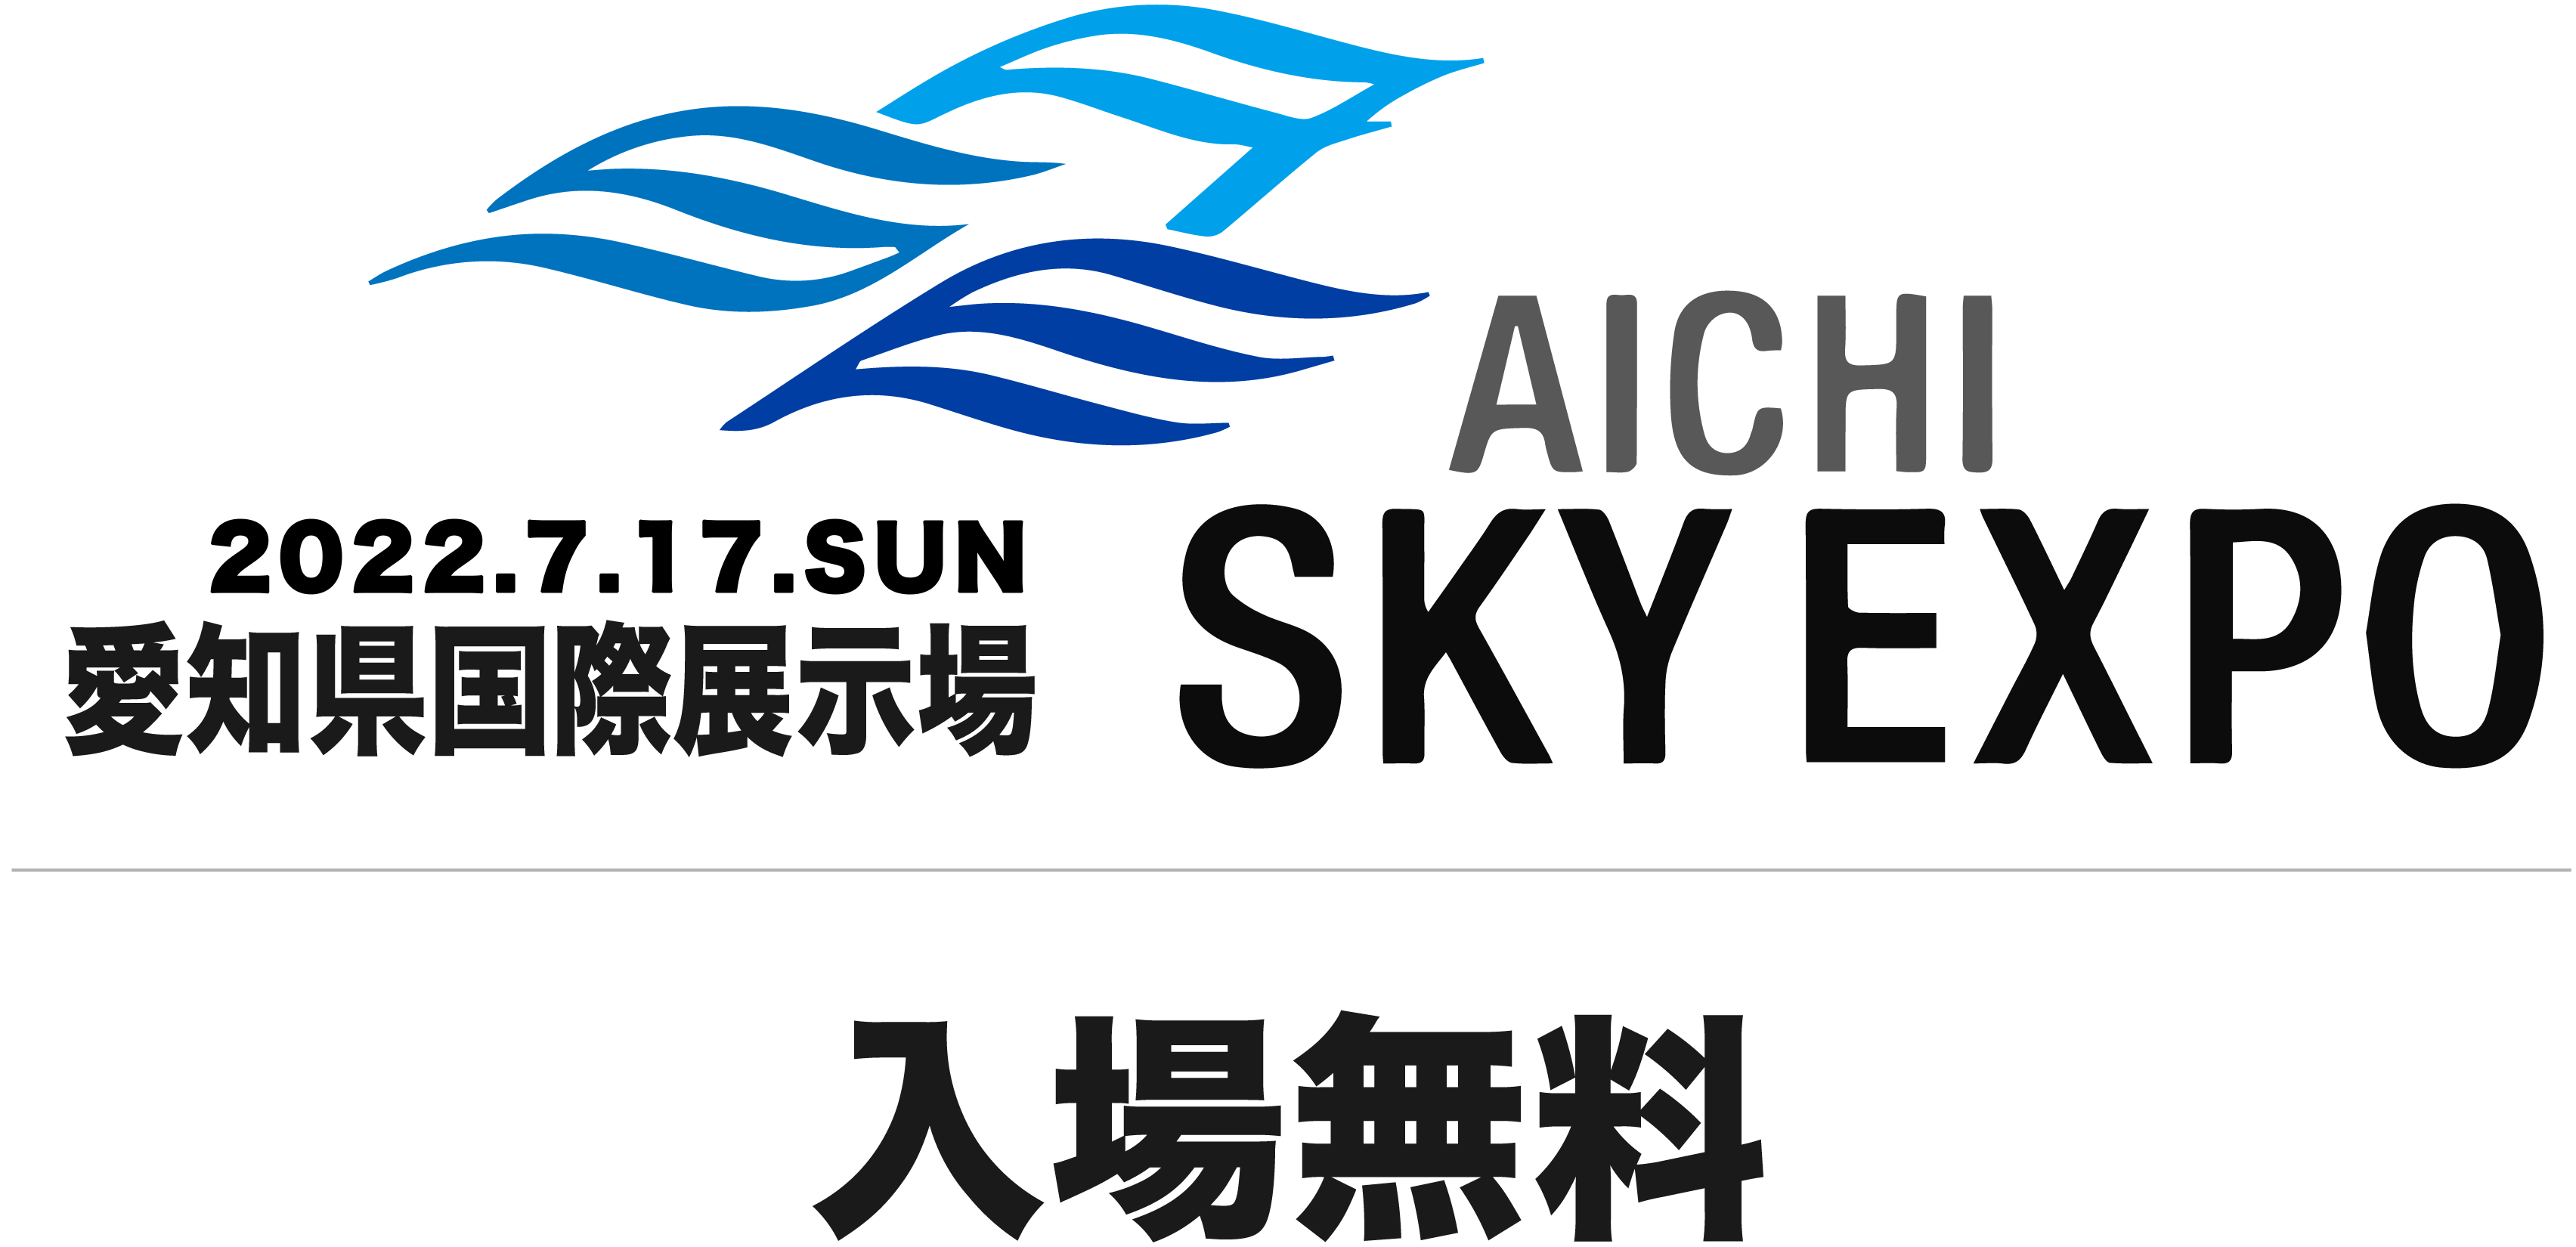 2021.6.20.SUN at 愛知県国際展示場 (Aichi Sky Expo) 入場完全無料